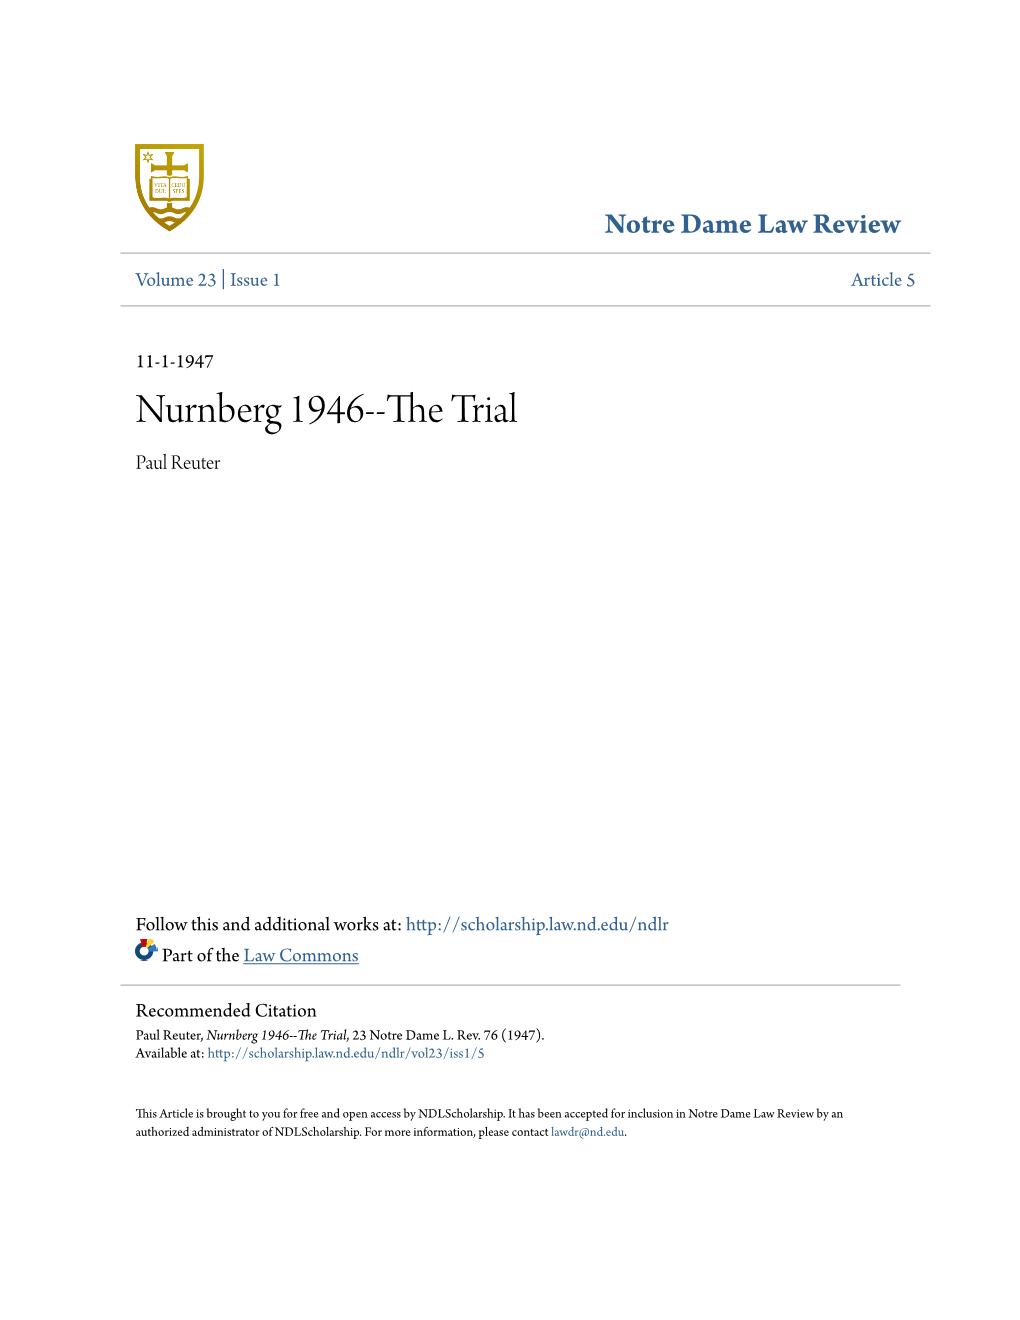 Nurnberg 1946--The Rt Ial Paul Reuter